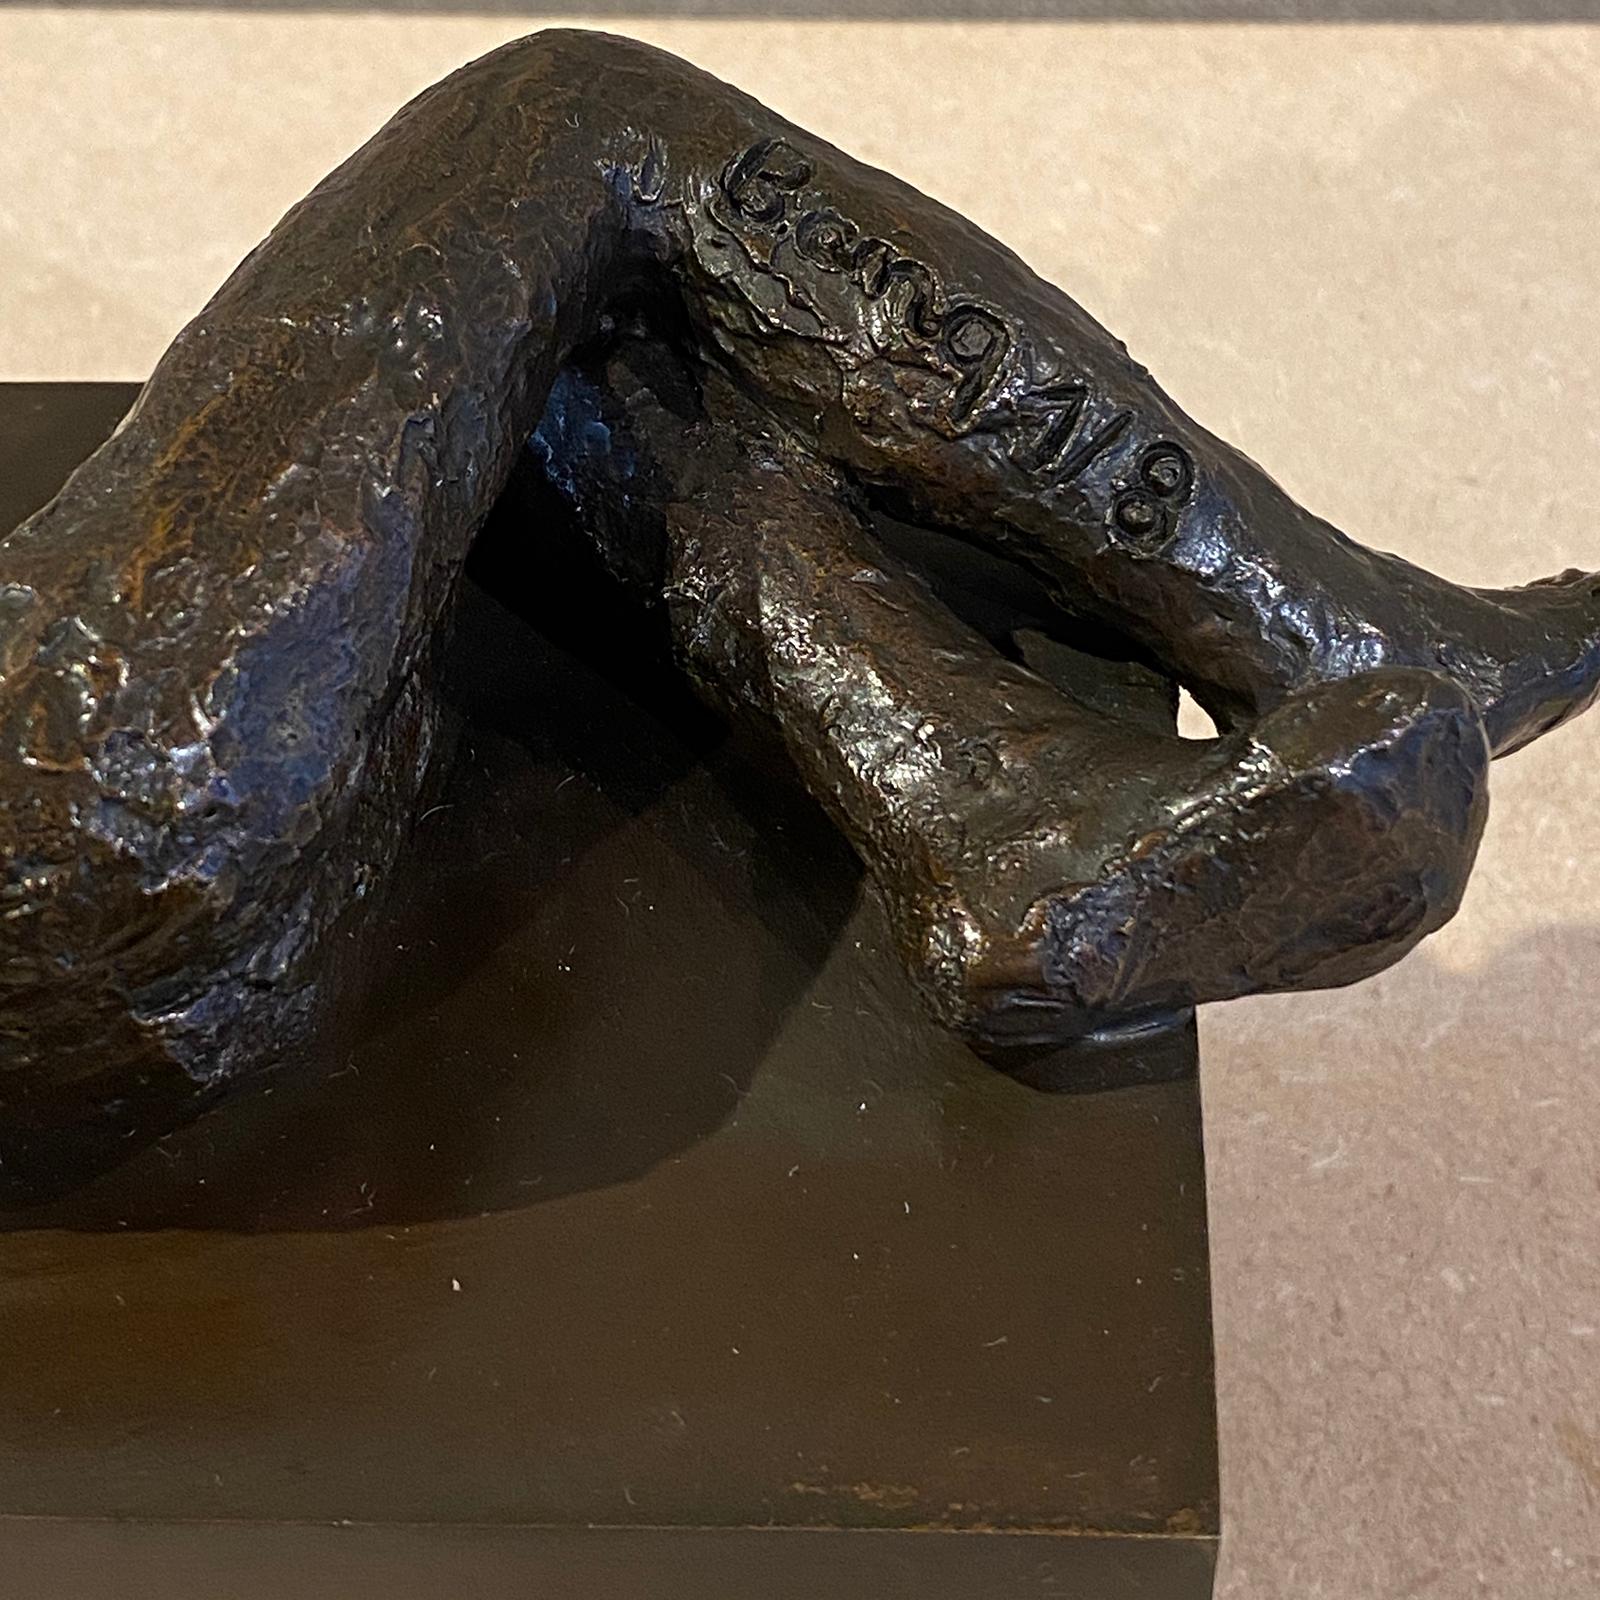 Le dormeur, figurative bronze sculpture by Maguy Banq minimalist man sleeping For Sale 2